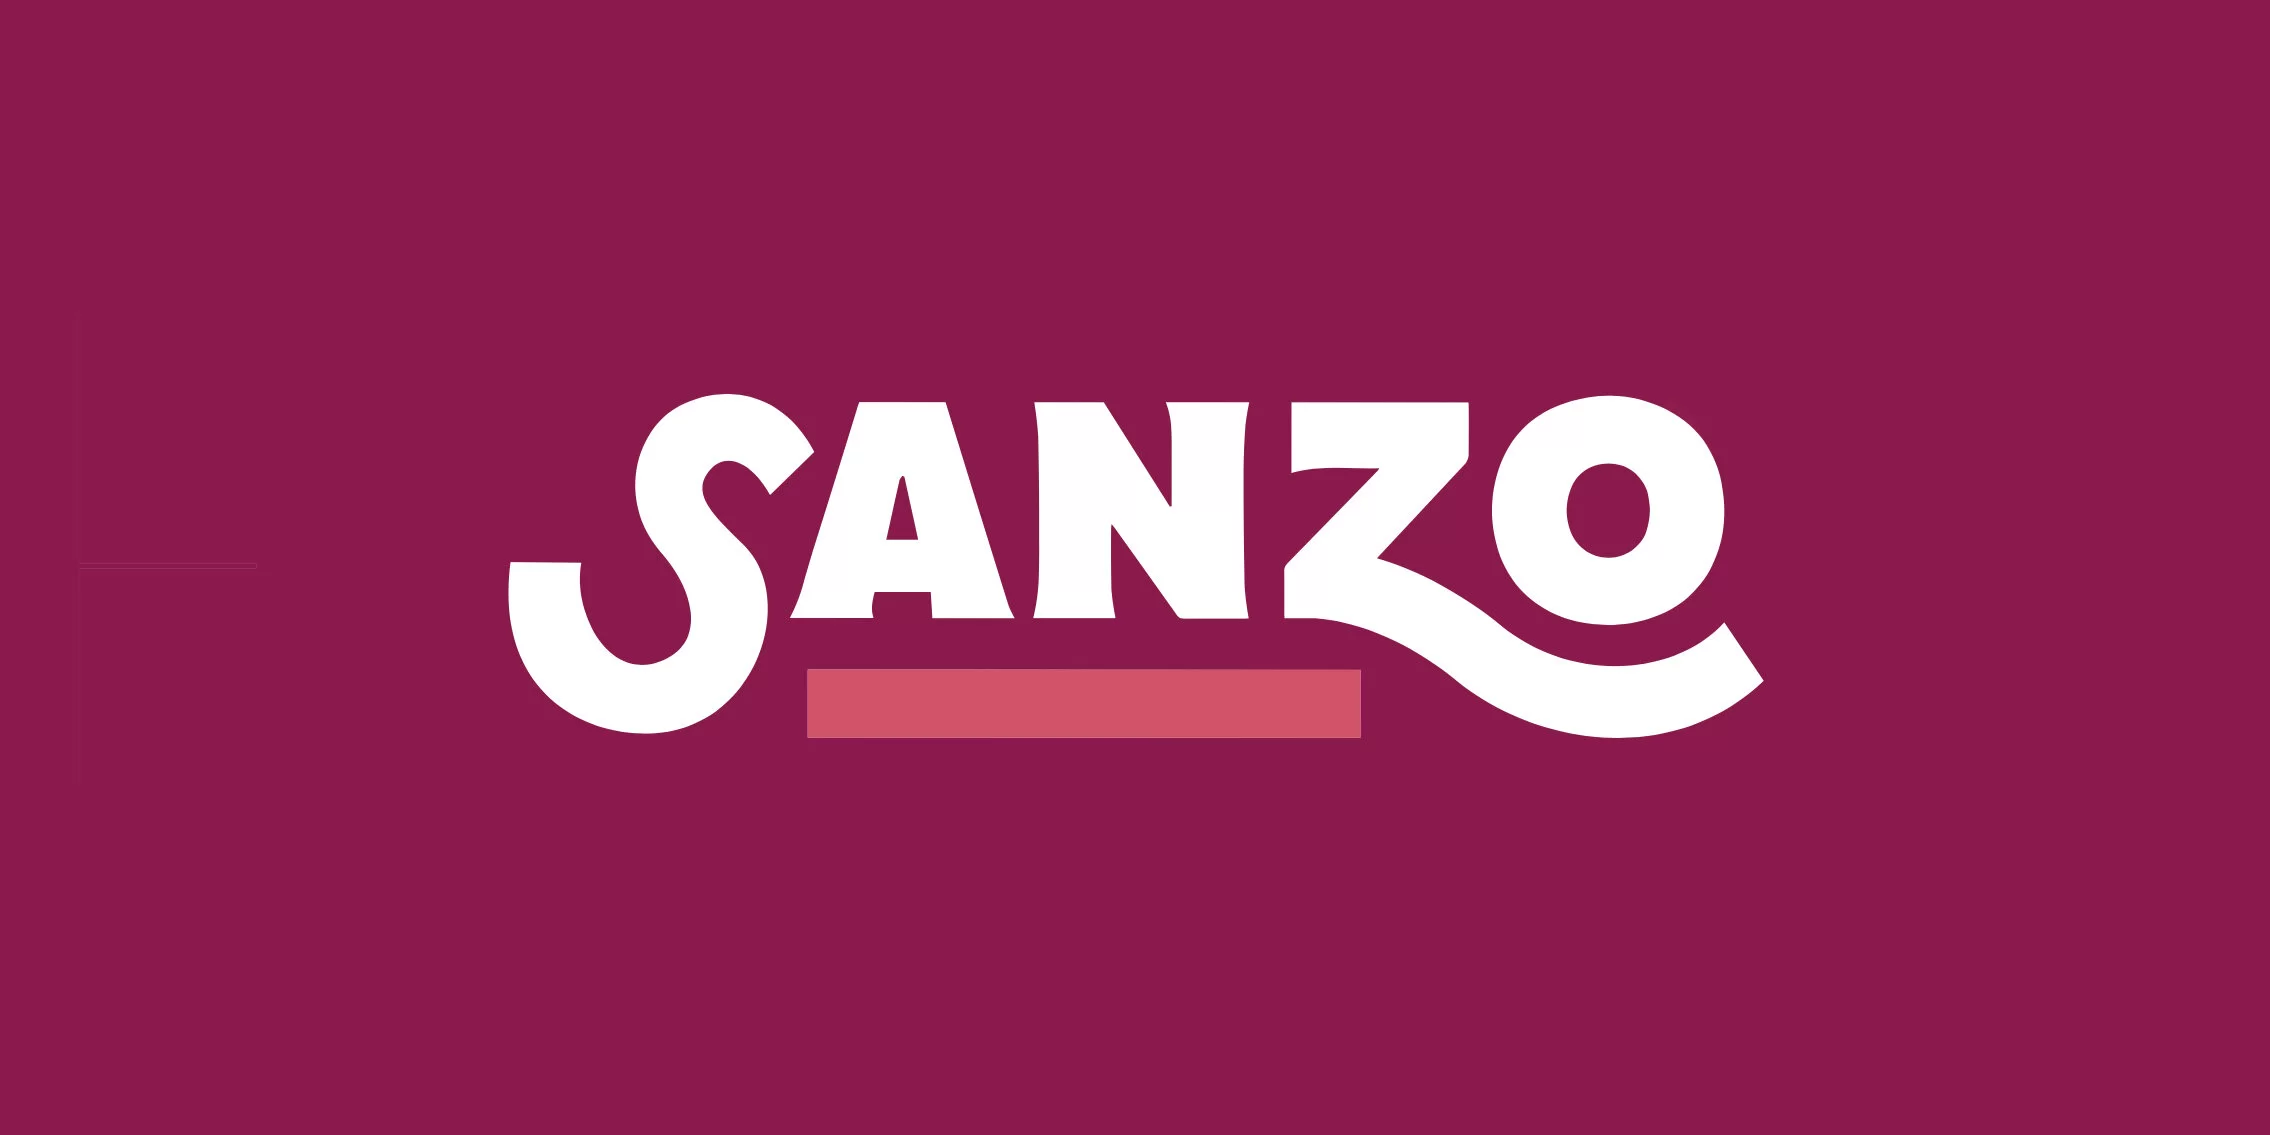 SANZO_01-1